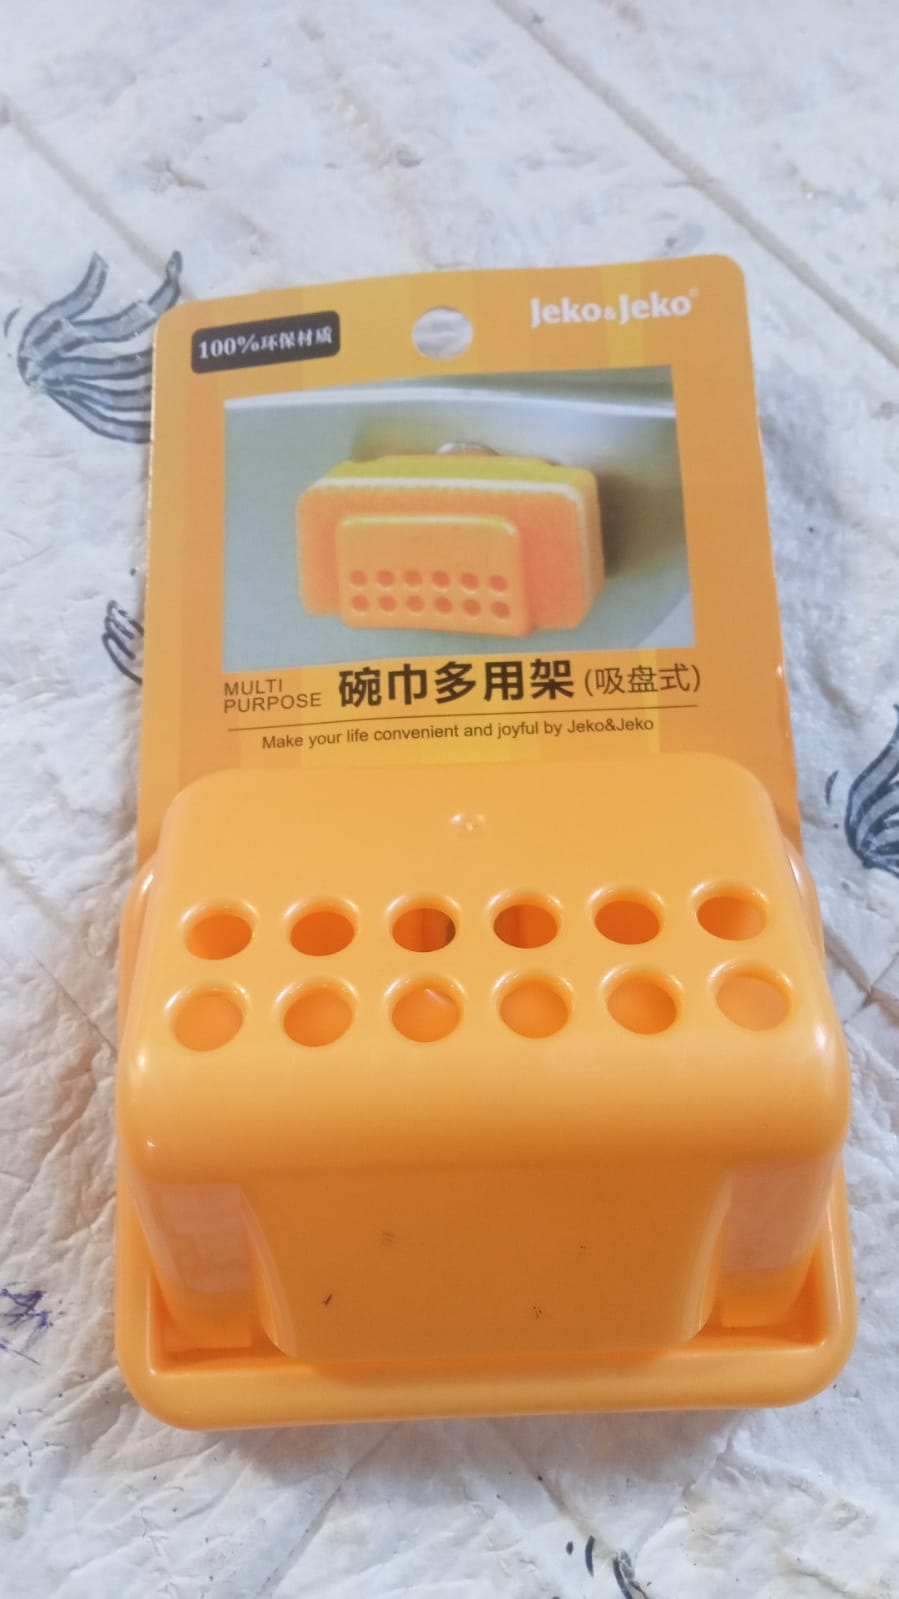 4112 Self Adhesive Sponge Holder No-Drilling Soap Holder for Shower Bathroom Kitchen, Sponge Holder - Kitchen Sink Organizer - Sink Caddy - Soap Holder - Spoon Rest - Multipurpose Use